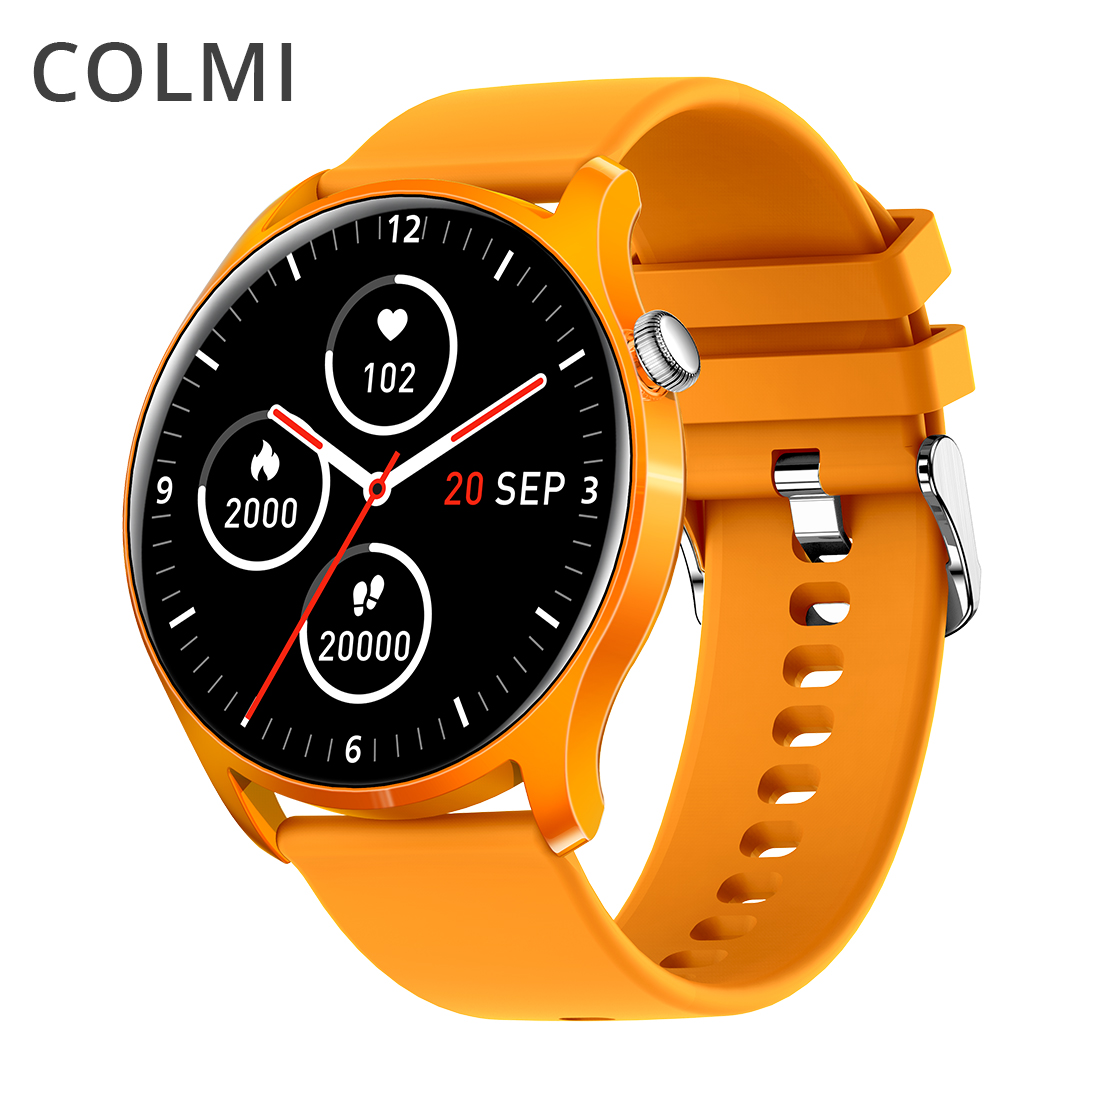 COLMI SKY 8 Mná Faire Cliste IP67 Fir Smartwatch uiscedhíonach Bluetooth Do Android i (6)